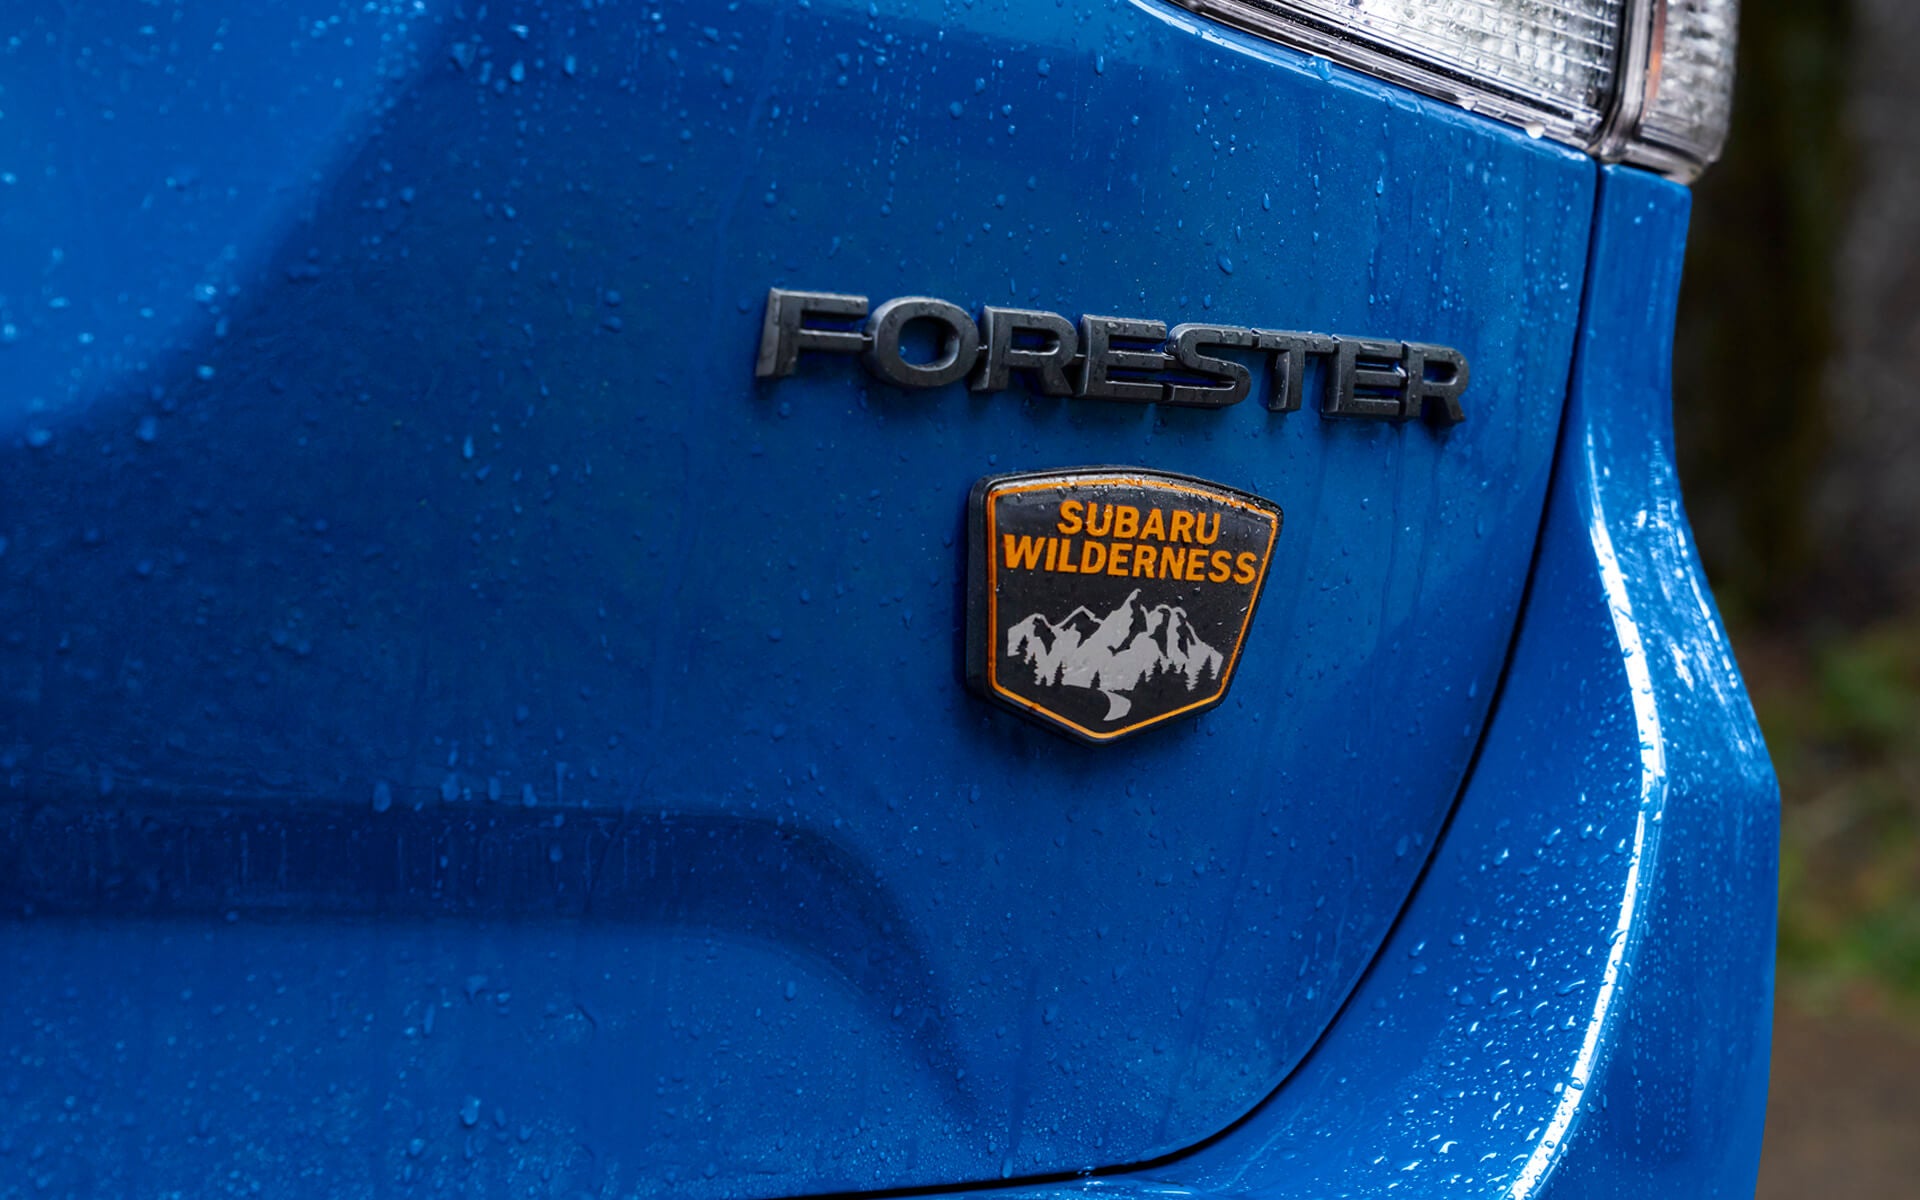 2022 Subaru Forester Wilderness | Sunset Hills Subaru in Sunset Hills MO